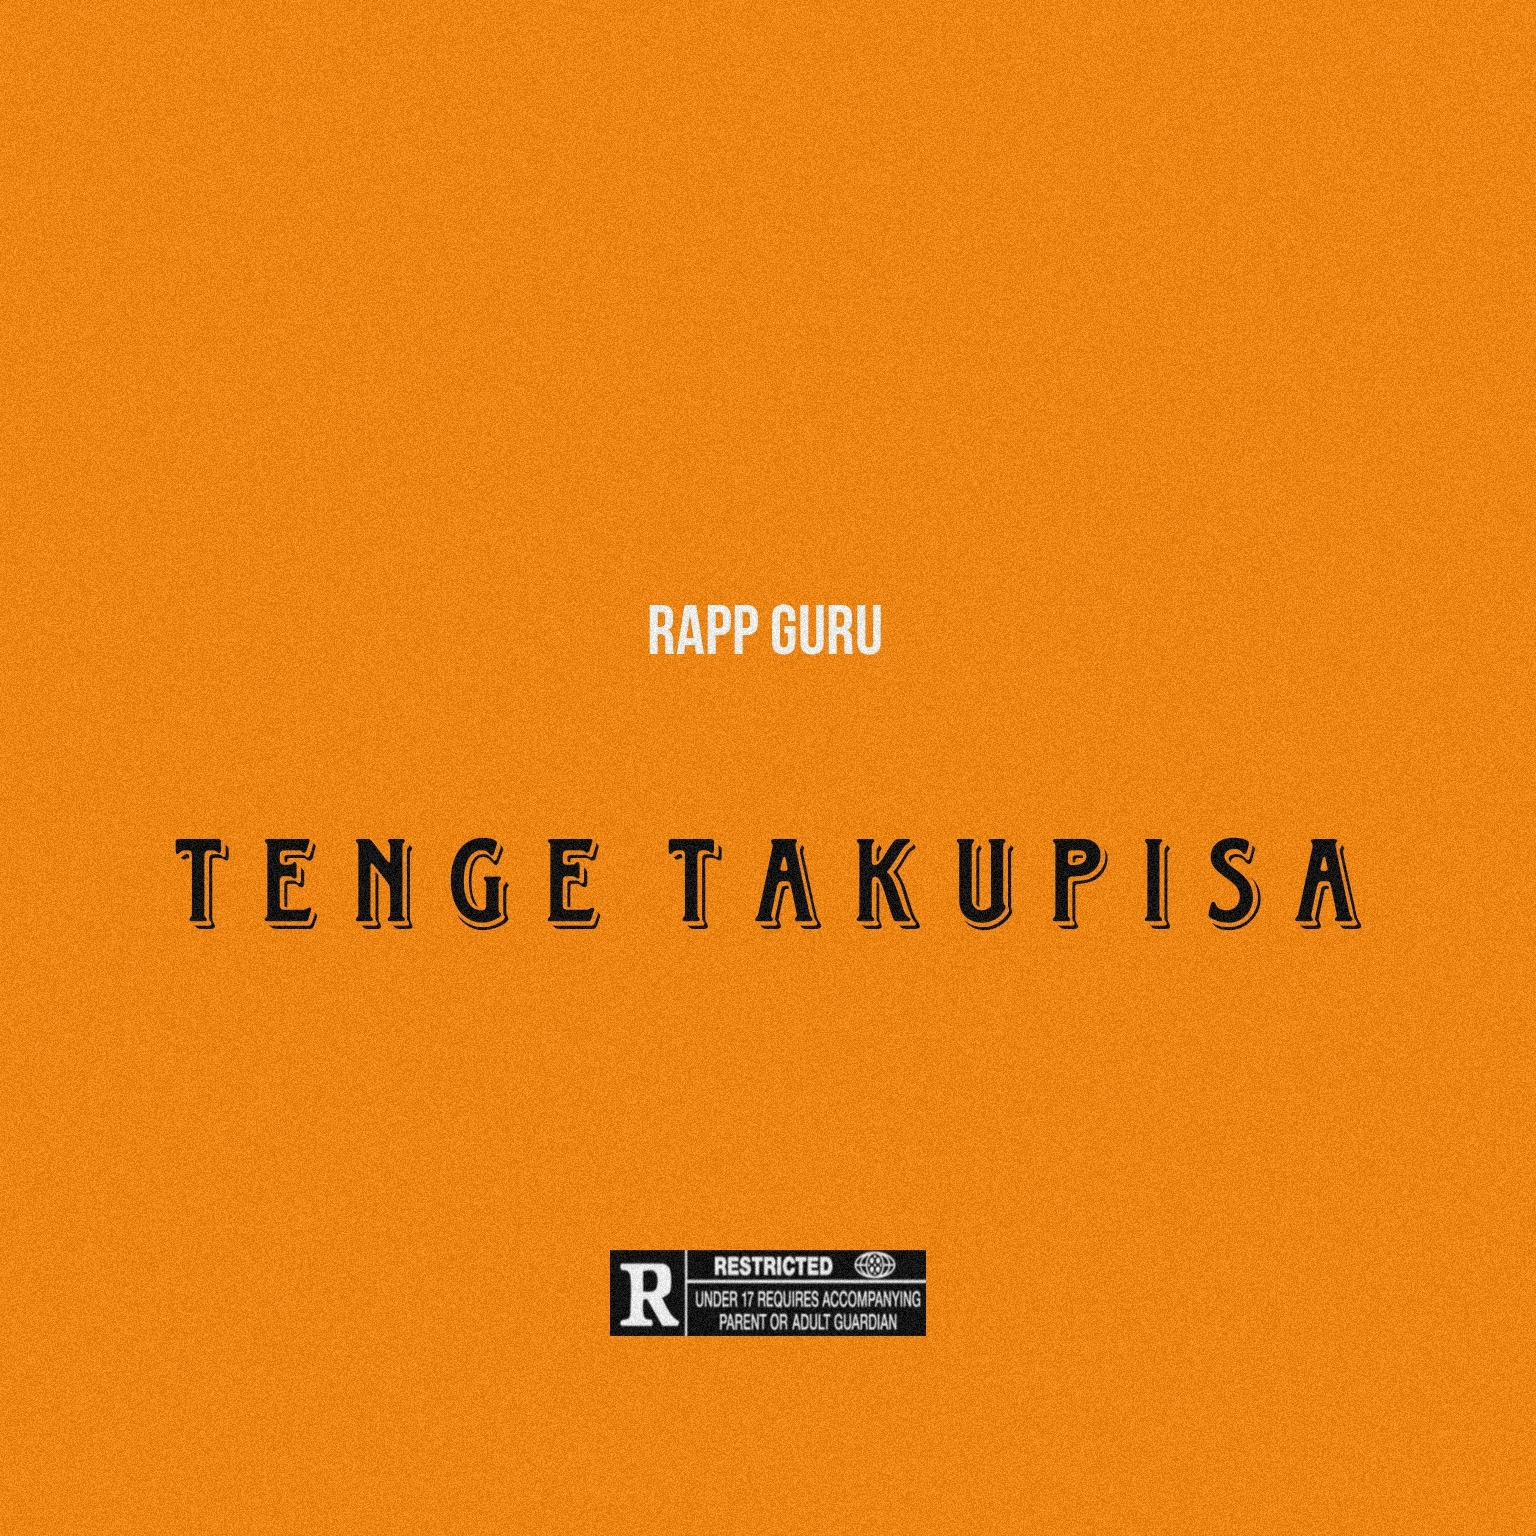 Tenge Takupisa